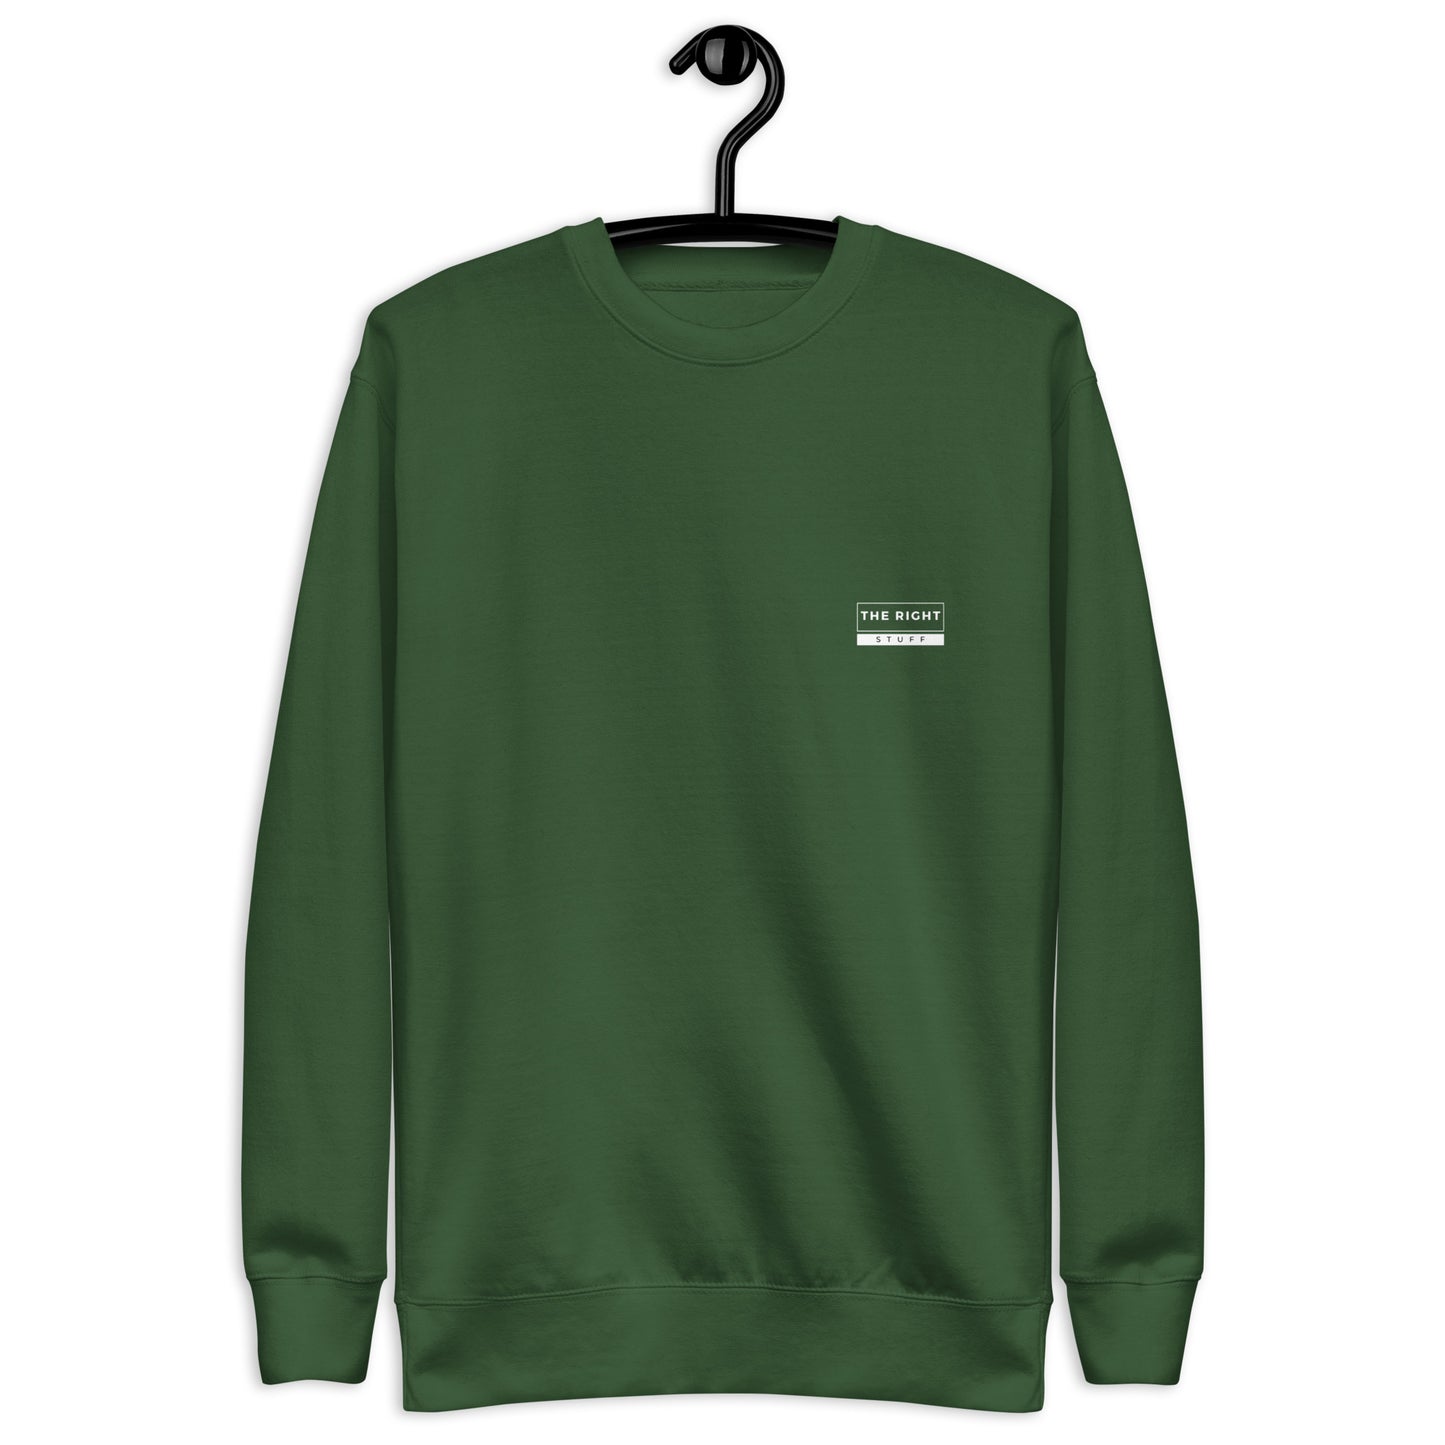 Unisex Premium Sweatshirt - KING OF KINGS back print